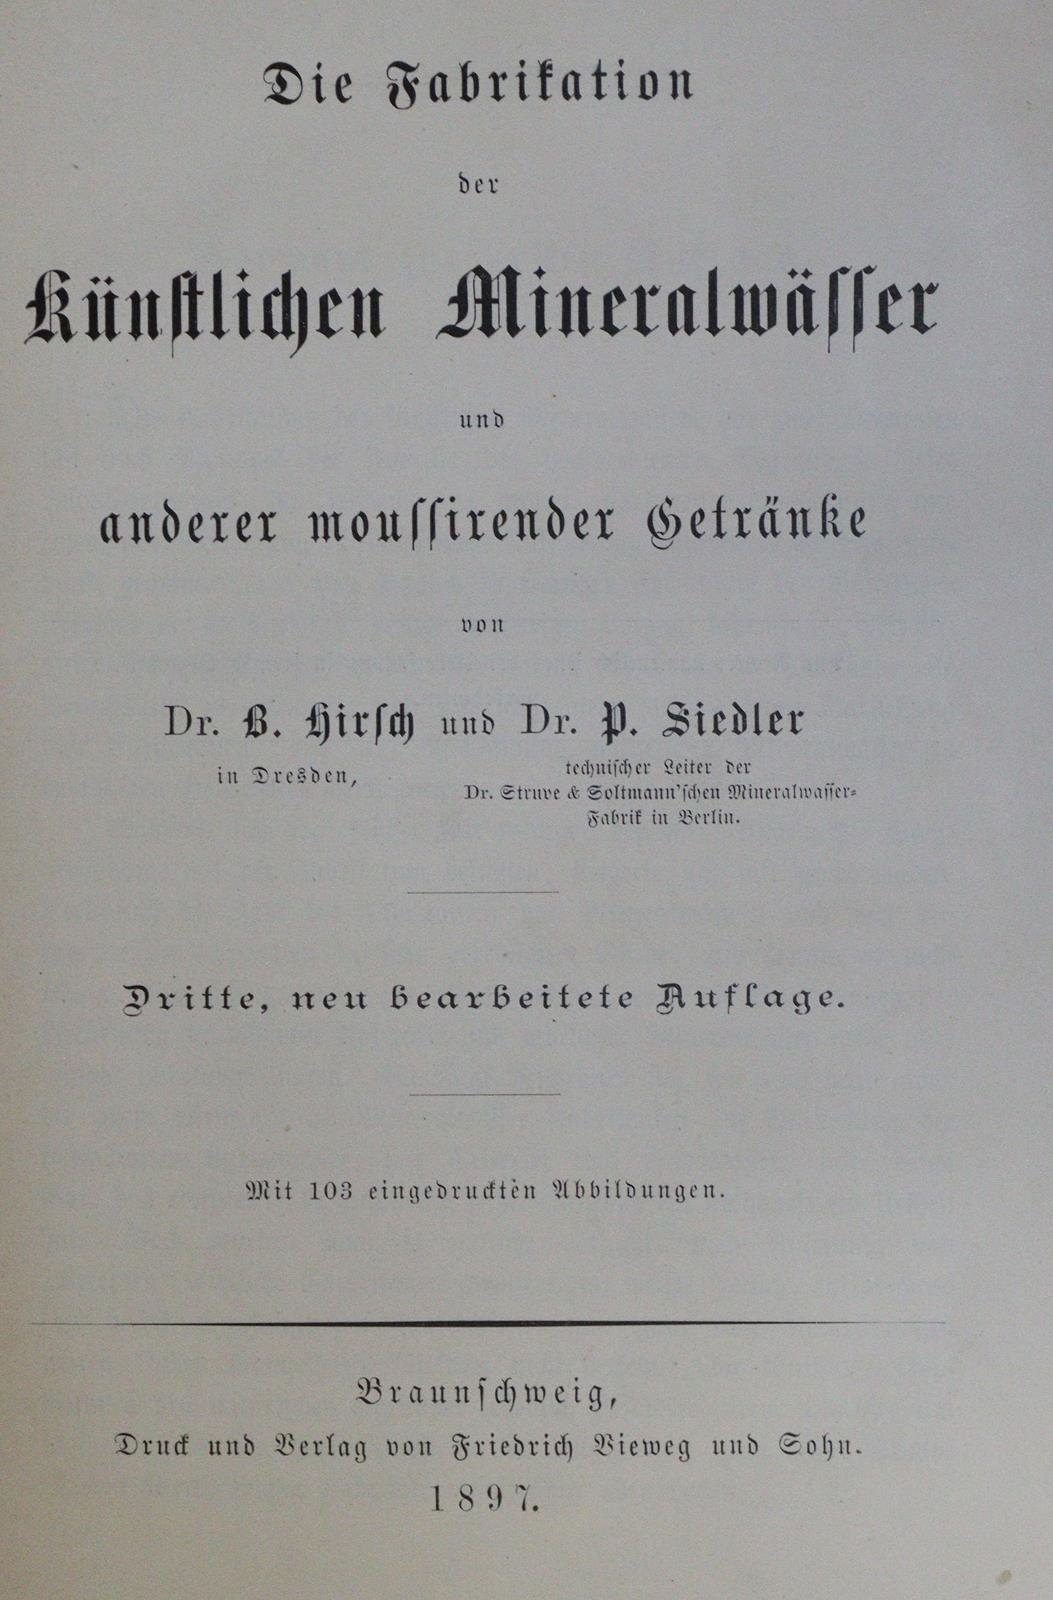 Hirsch,B. u. P.Siedler. | Bild Nr.1